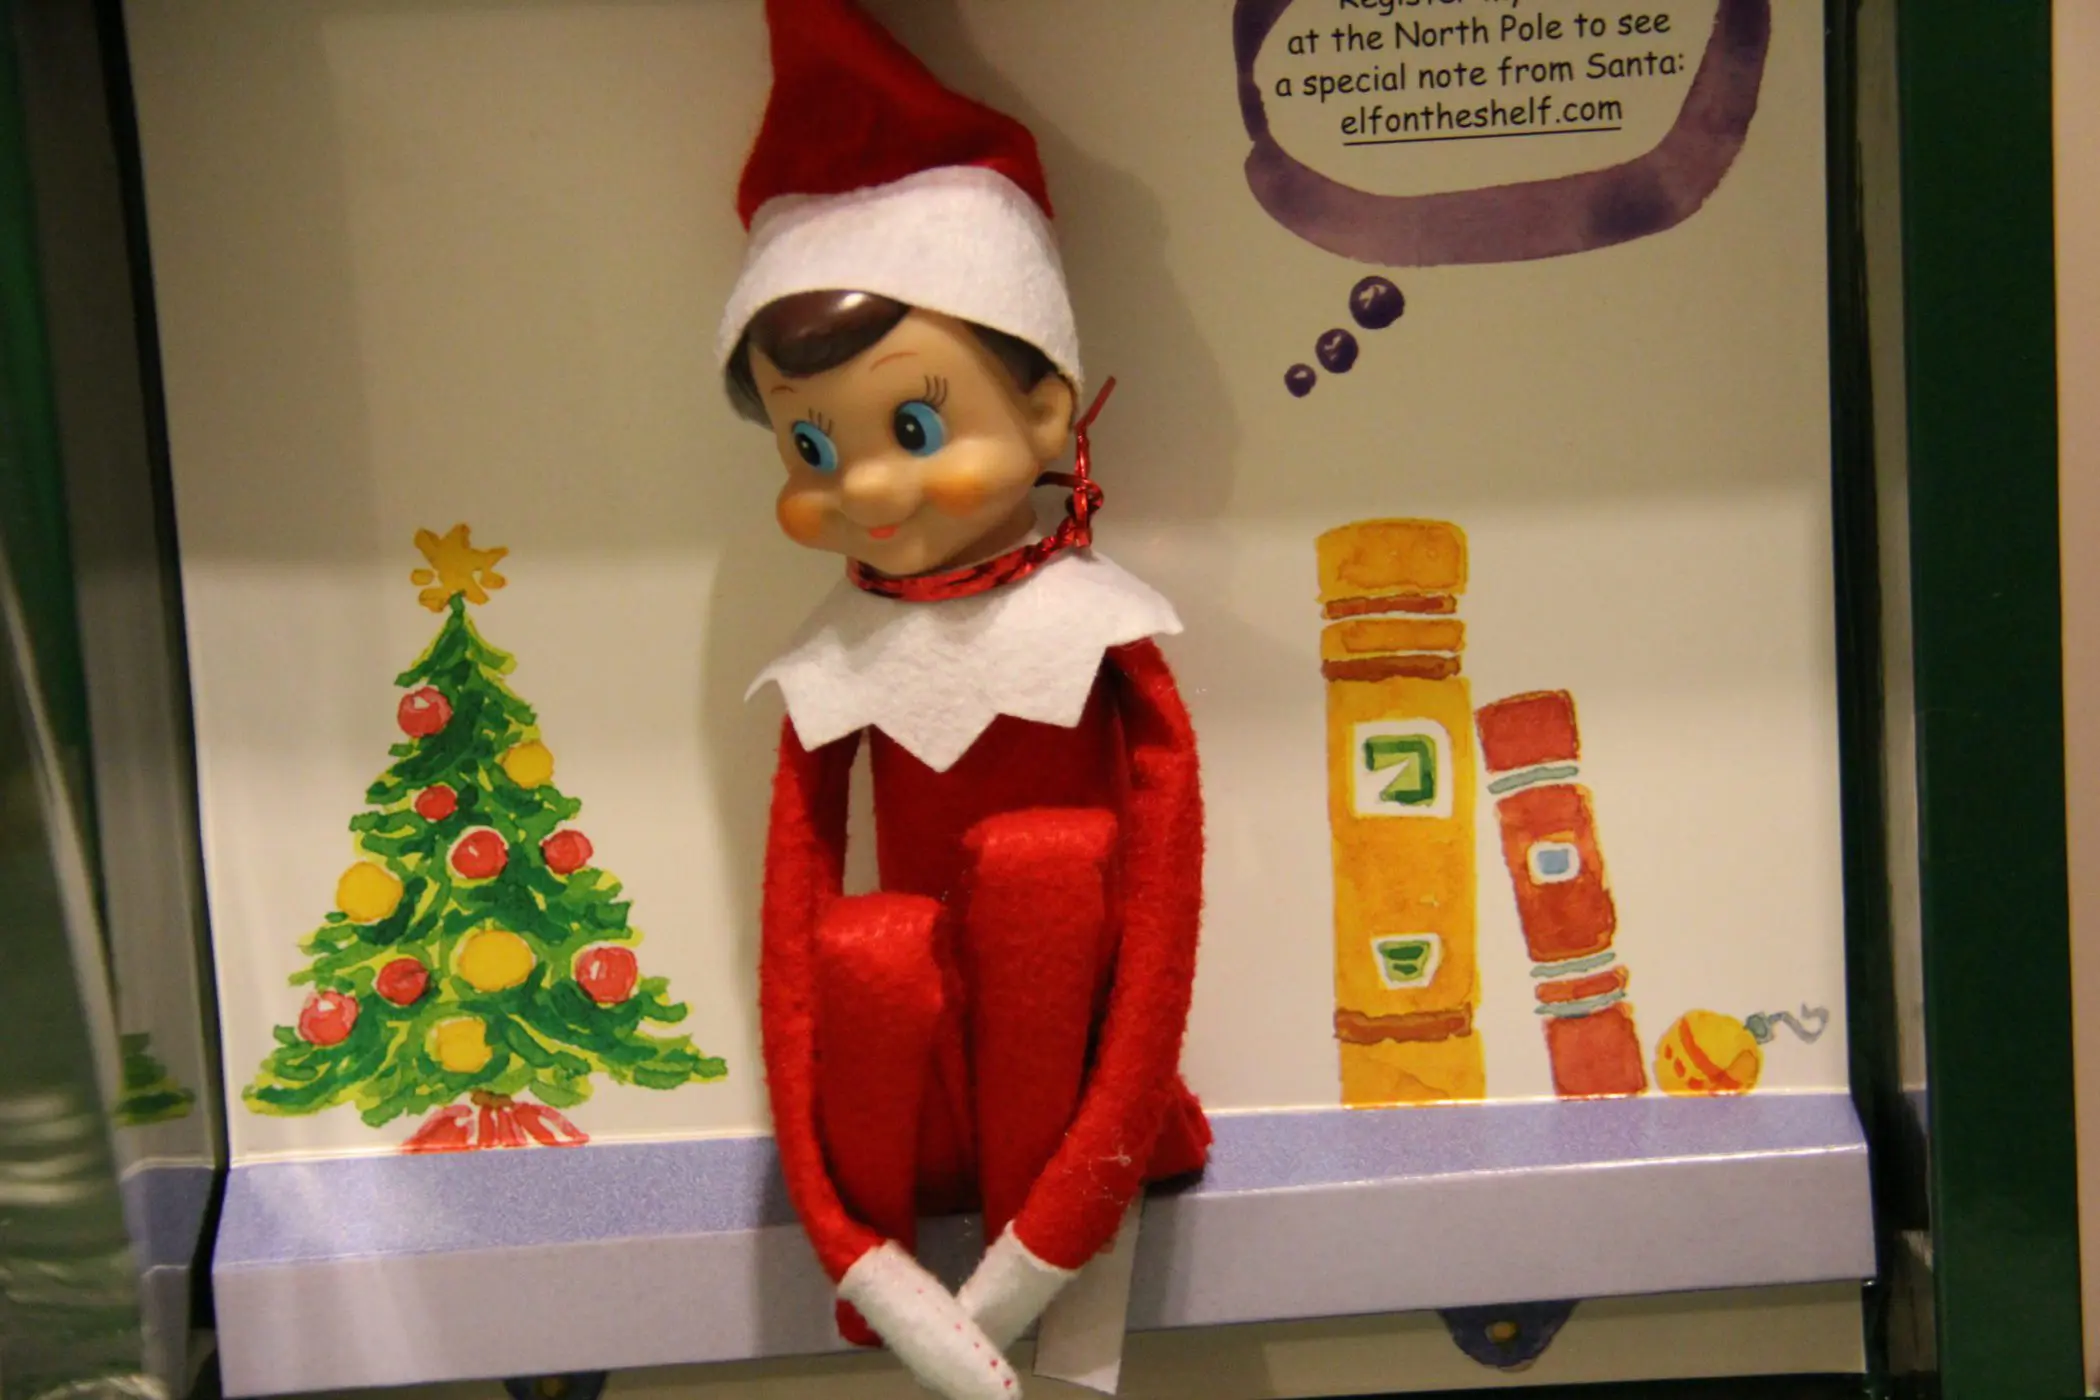 Behavior Modification, Santa and the Elf on the Shelf